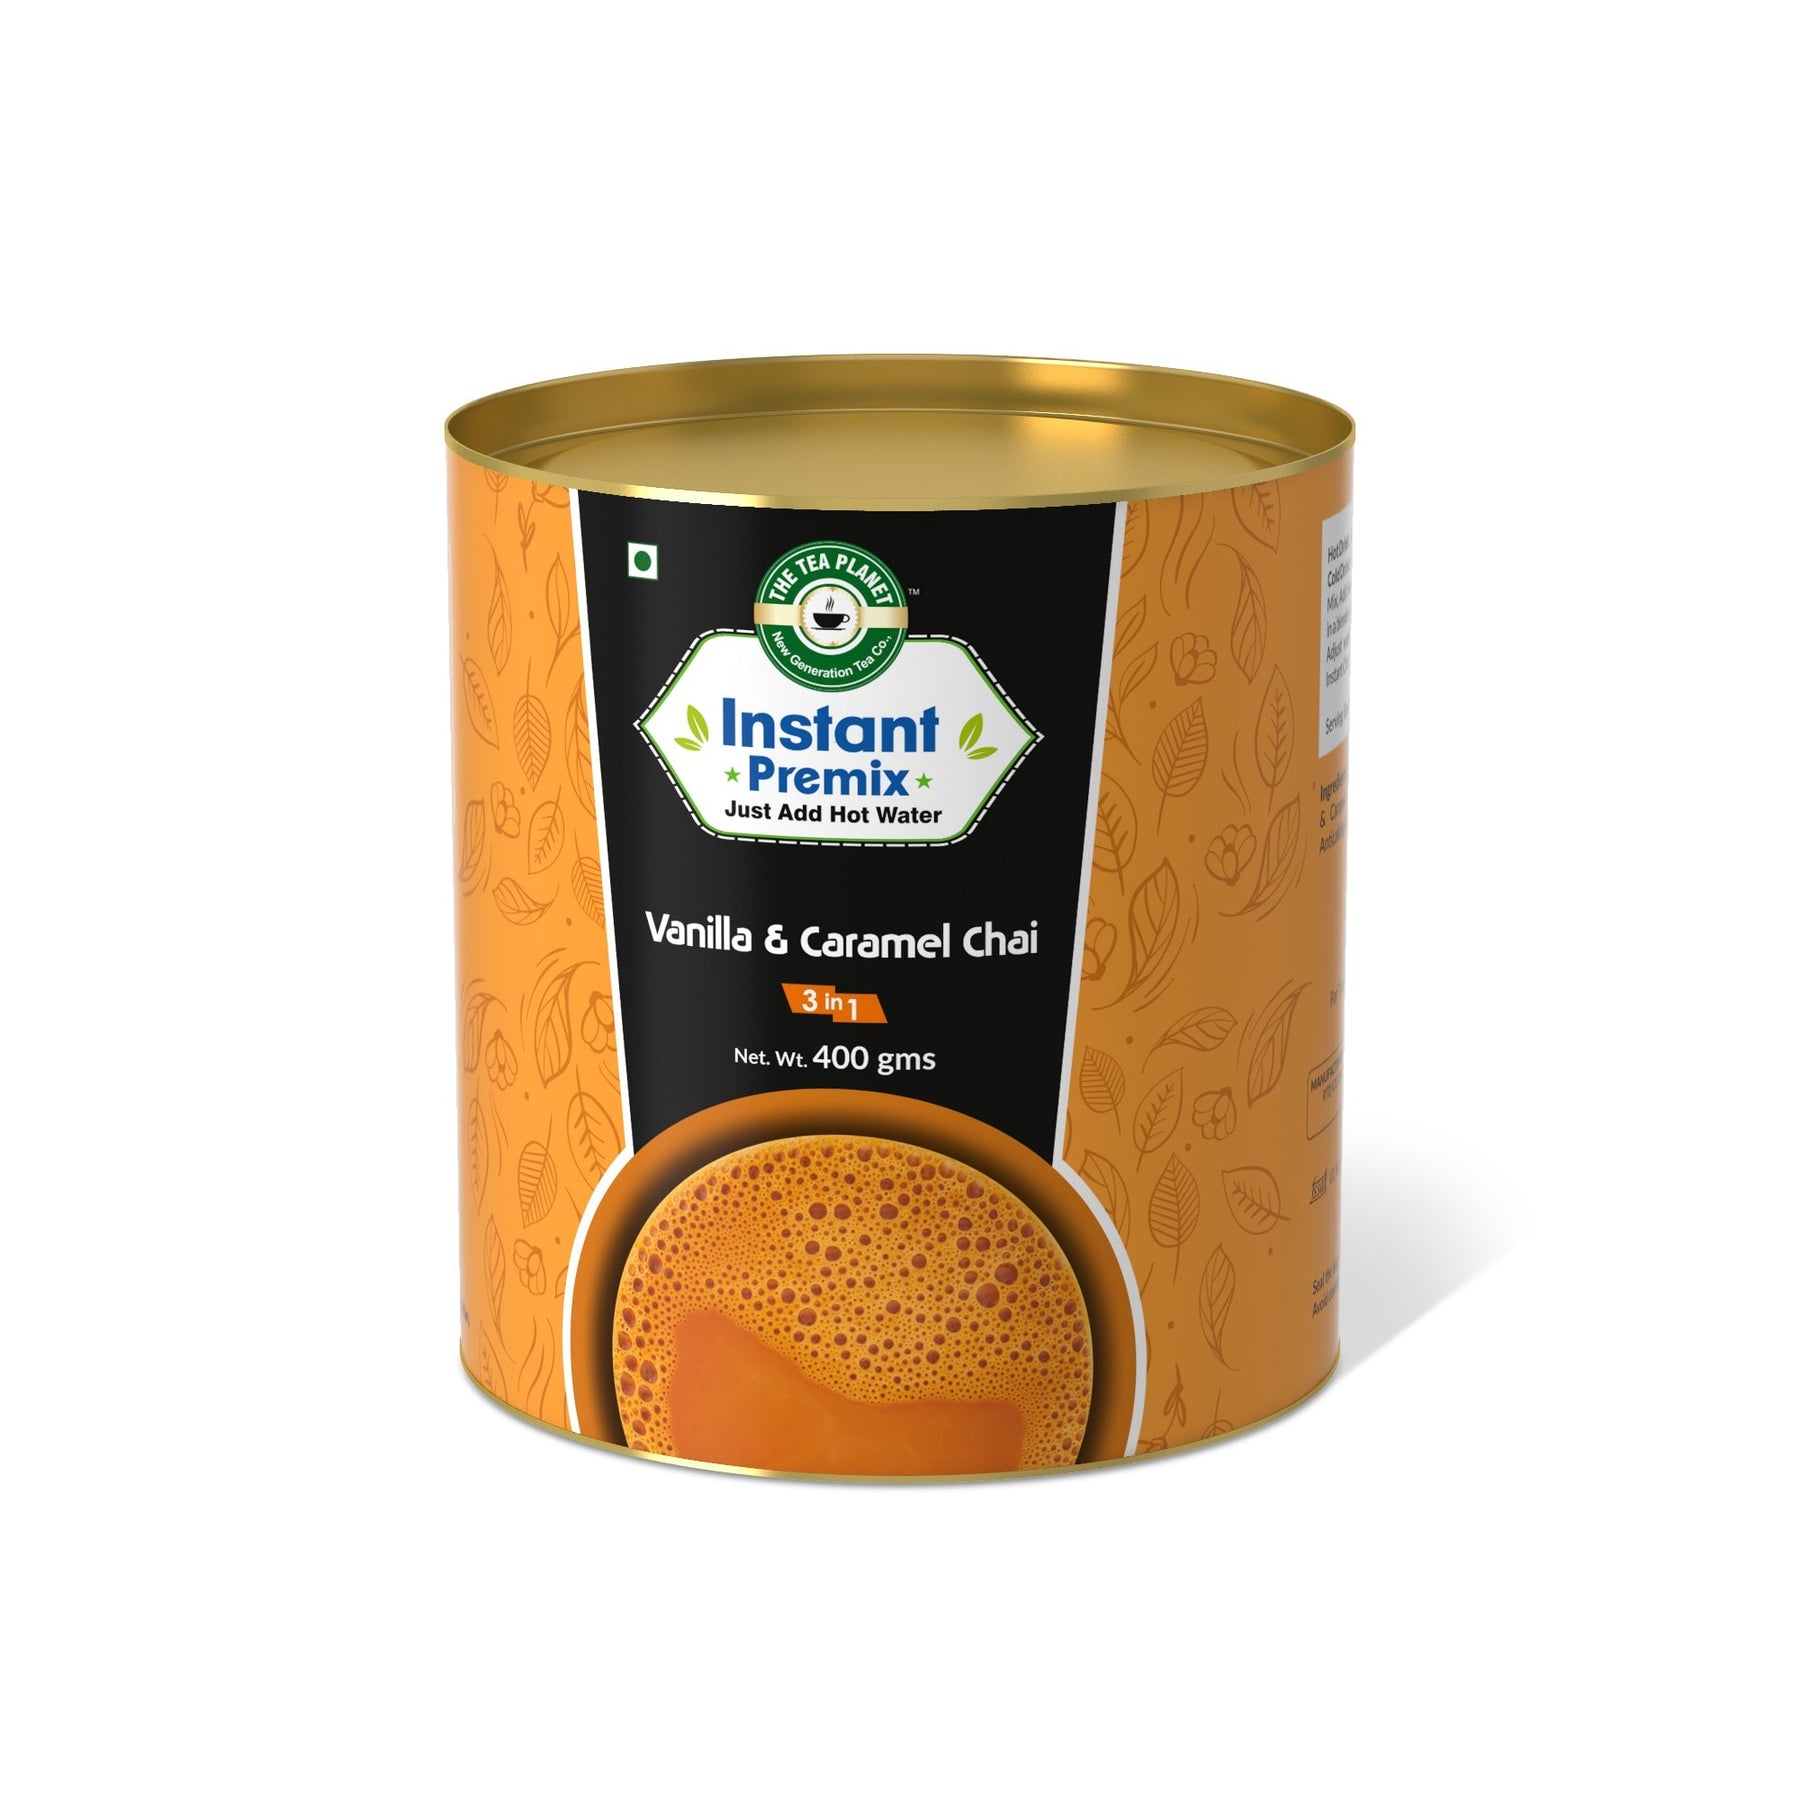 Vanilla & Caramel Chai Premix (3 in 1) - 800 gms